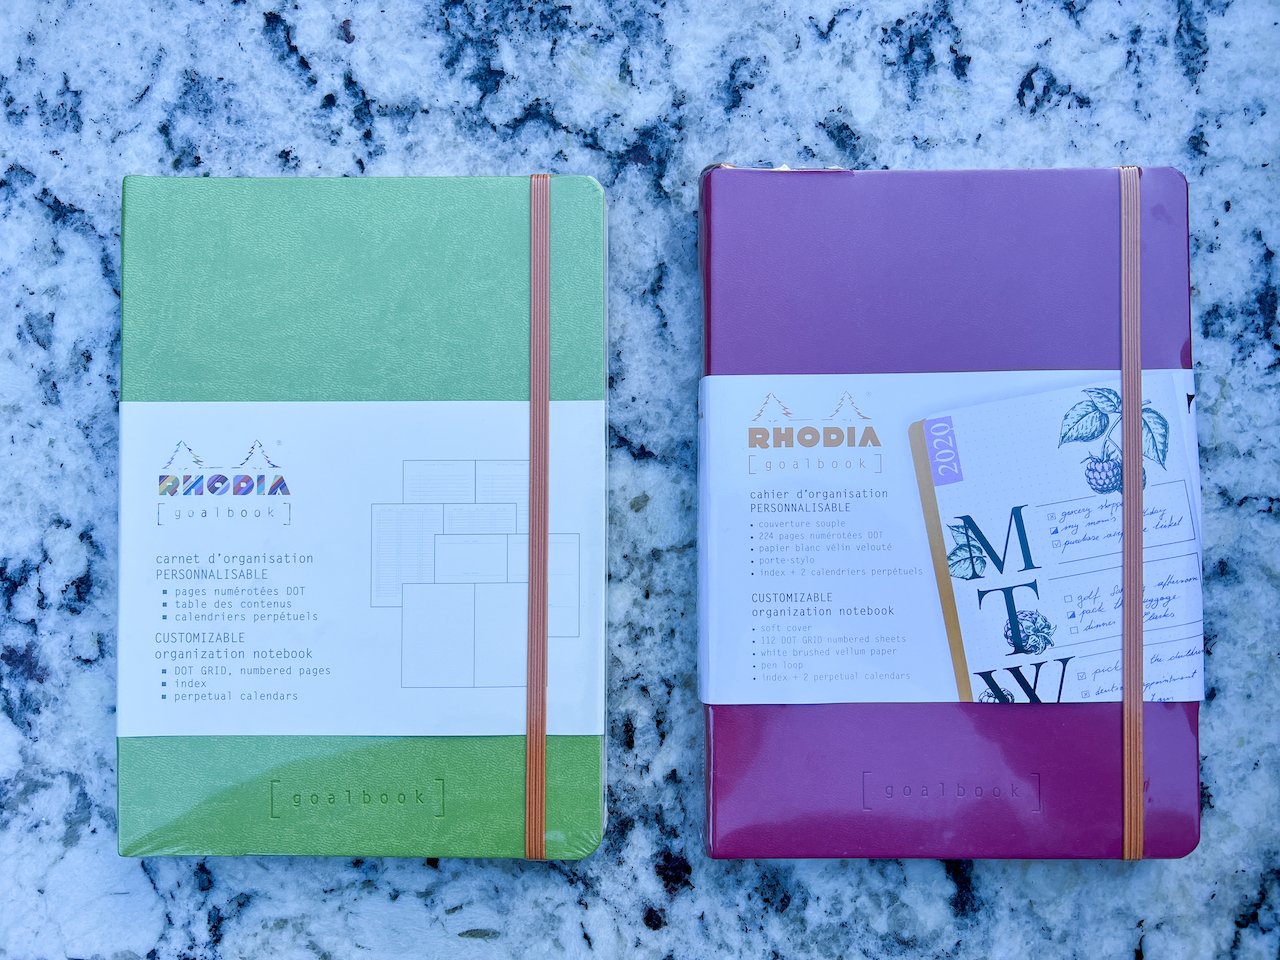 Rhodia GoalBook - A Quick Review — The Pen Addict